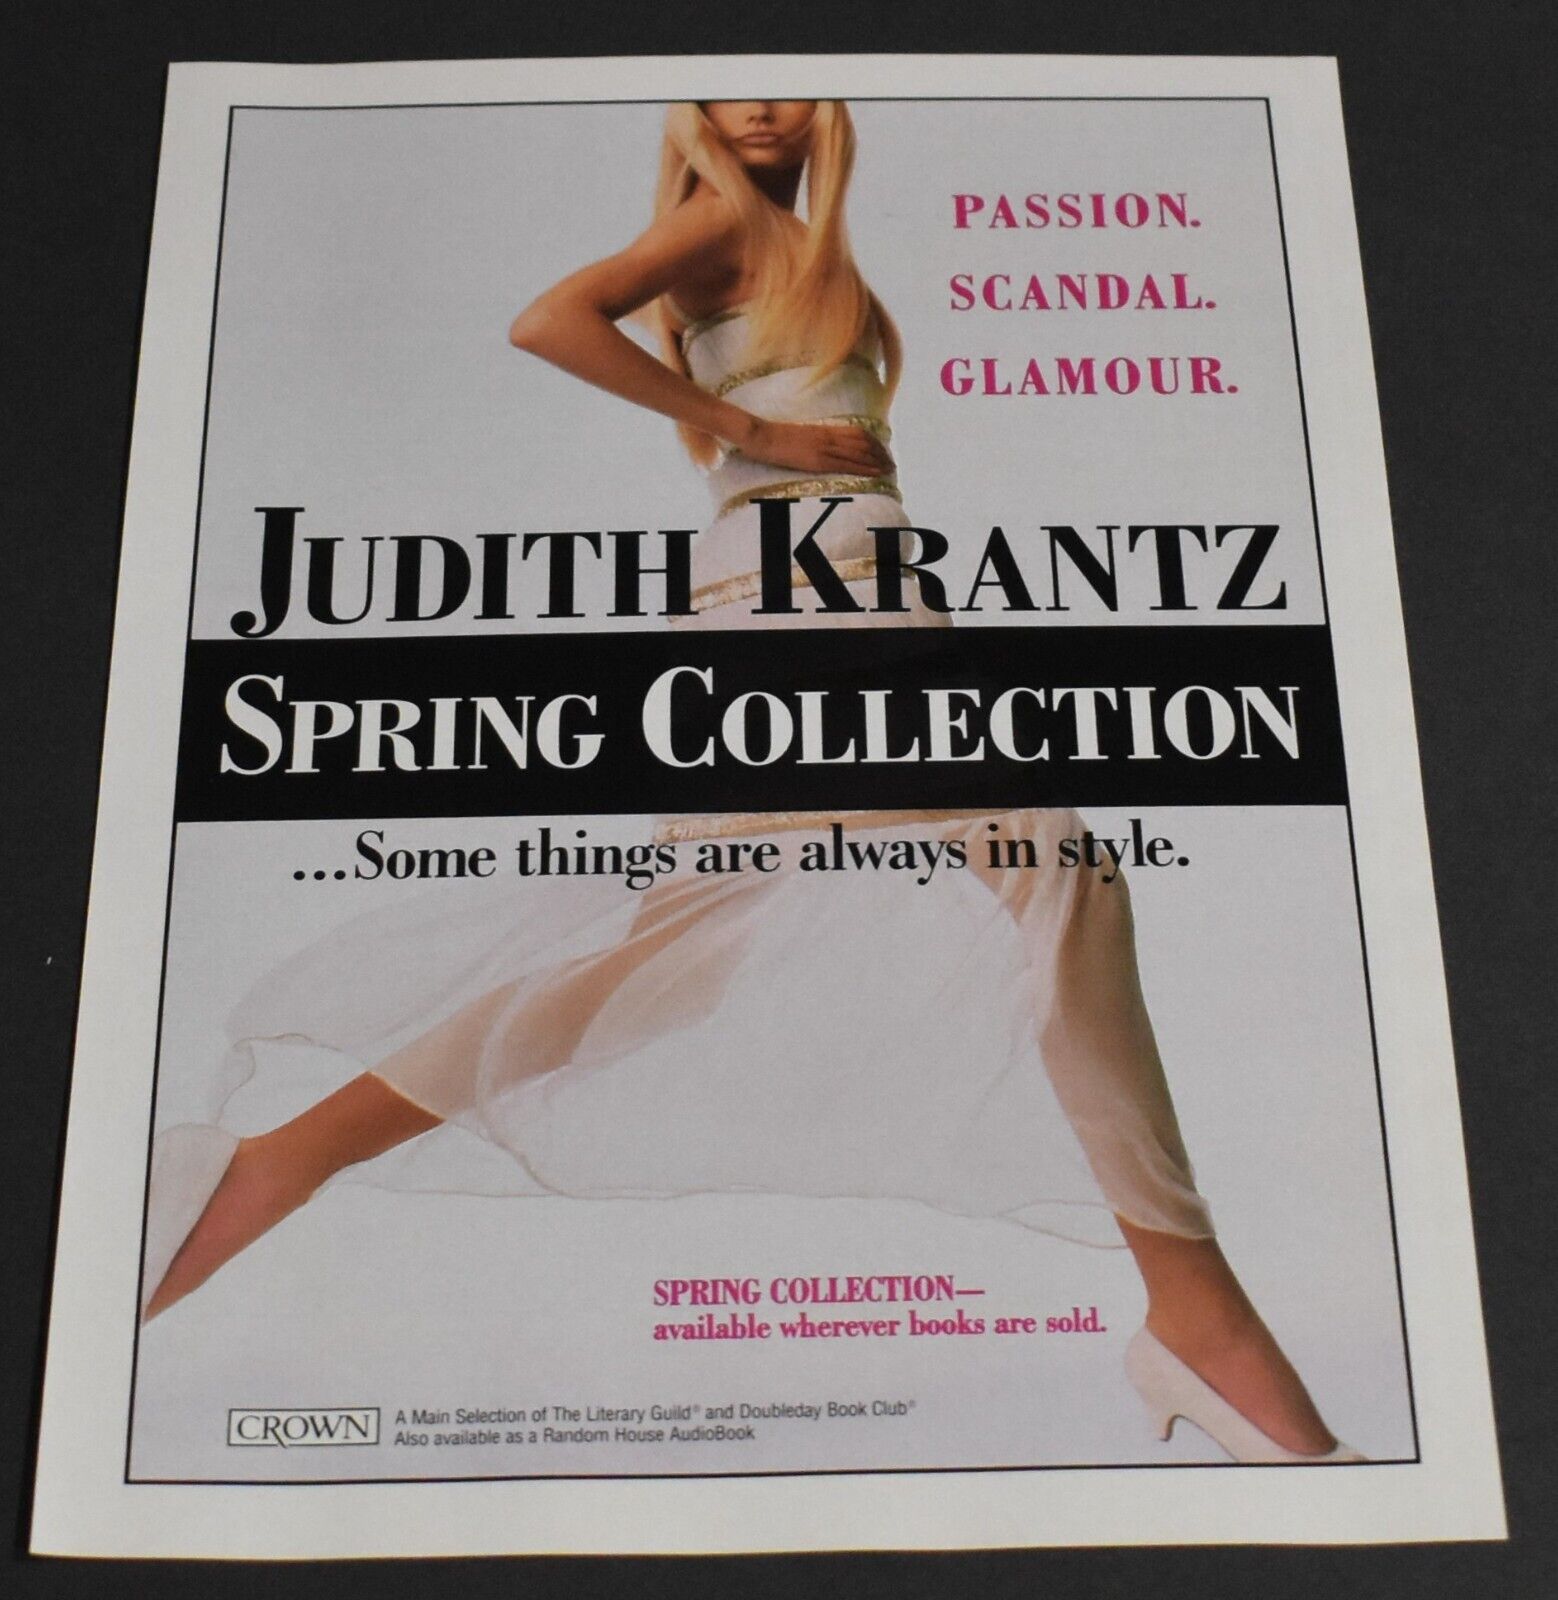 1996 Print Ad Sexy Heels Long Legs Lady Blonde Judith Krantz Dress Art Passion